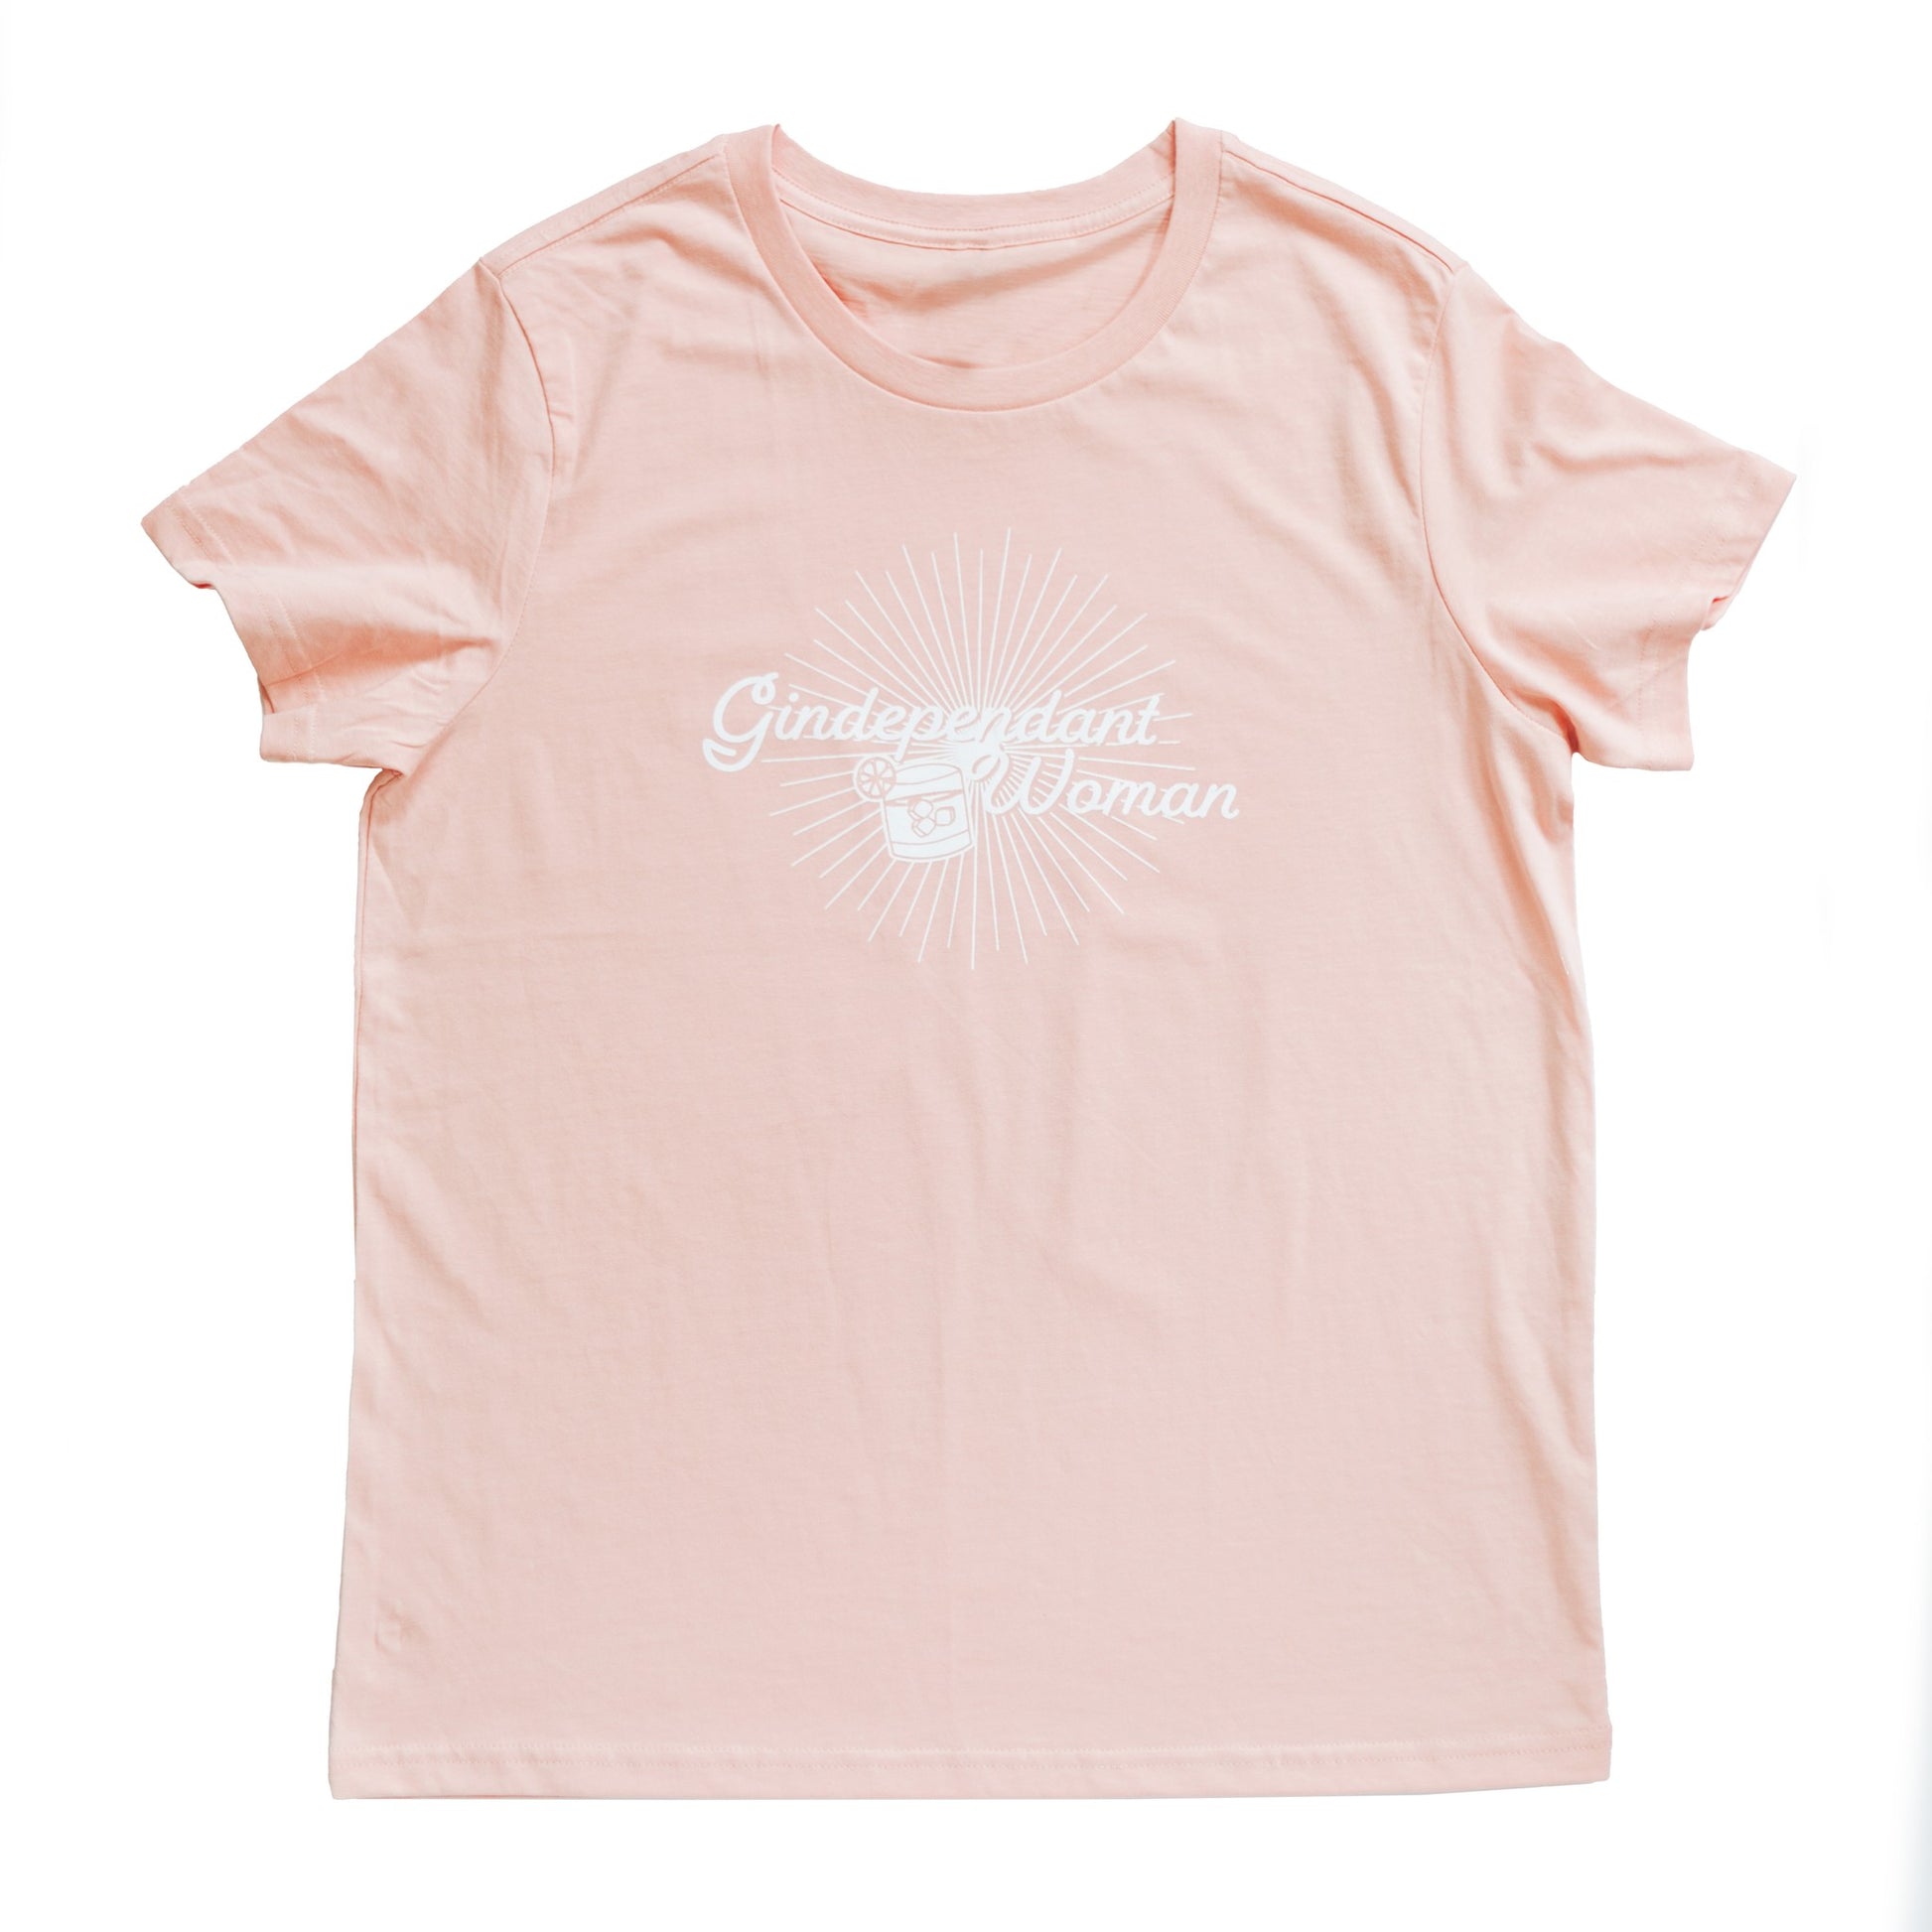 GINdependent Woman Shirt; Pale Pink Cotton tee, Australian Boho shop